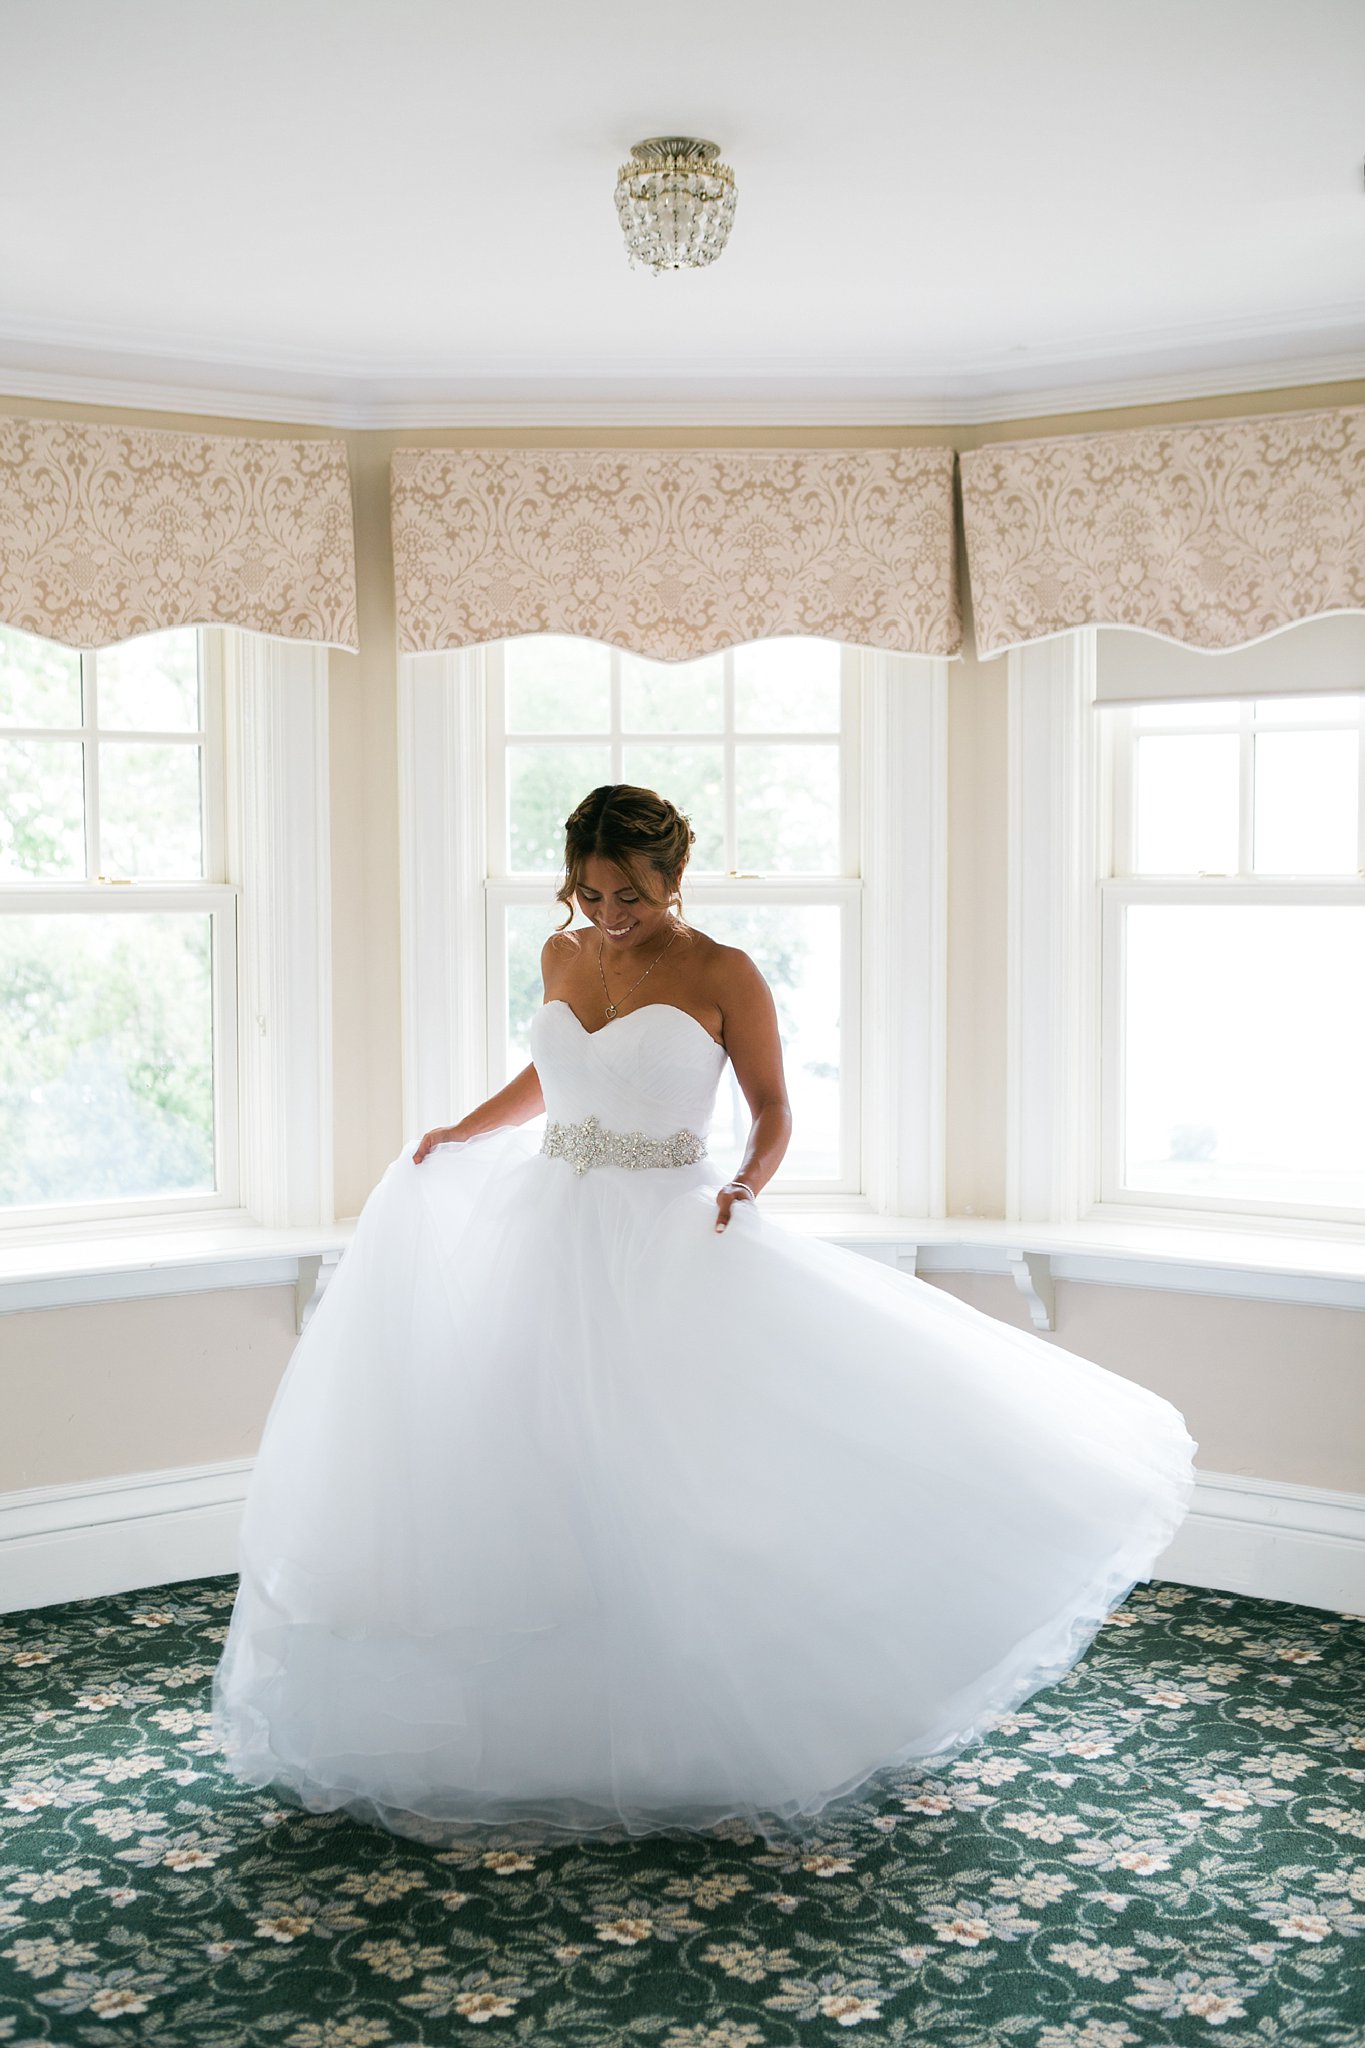 Jennifer Blaak Photography, Burlington Wedding Photographer, Wedding at Paletta Mansion in Burlington, Bride twirling in wedding dress